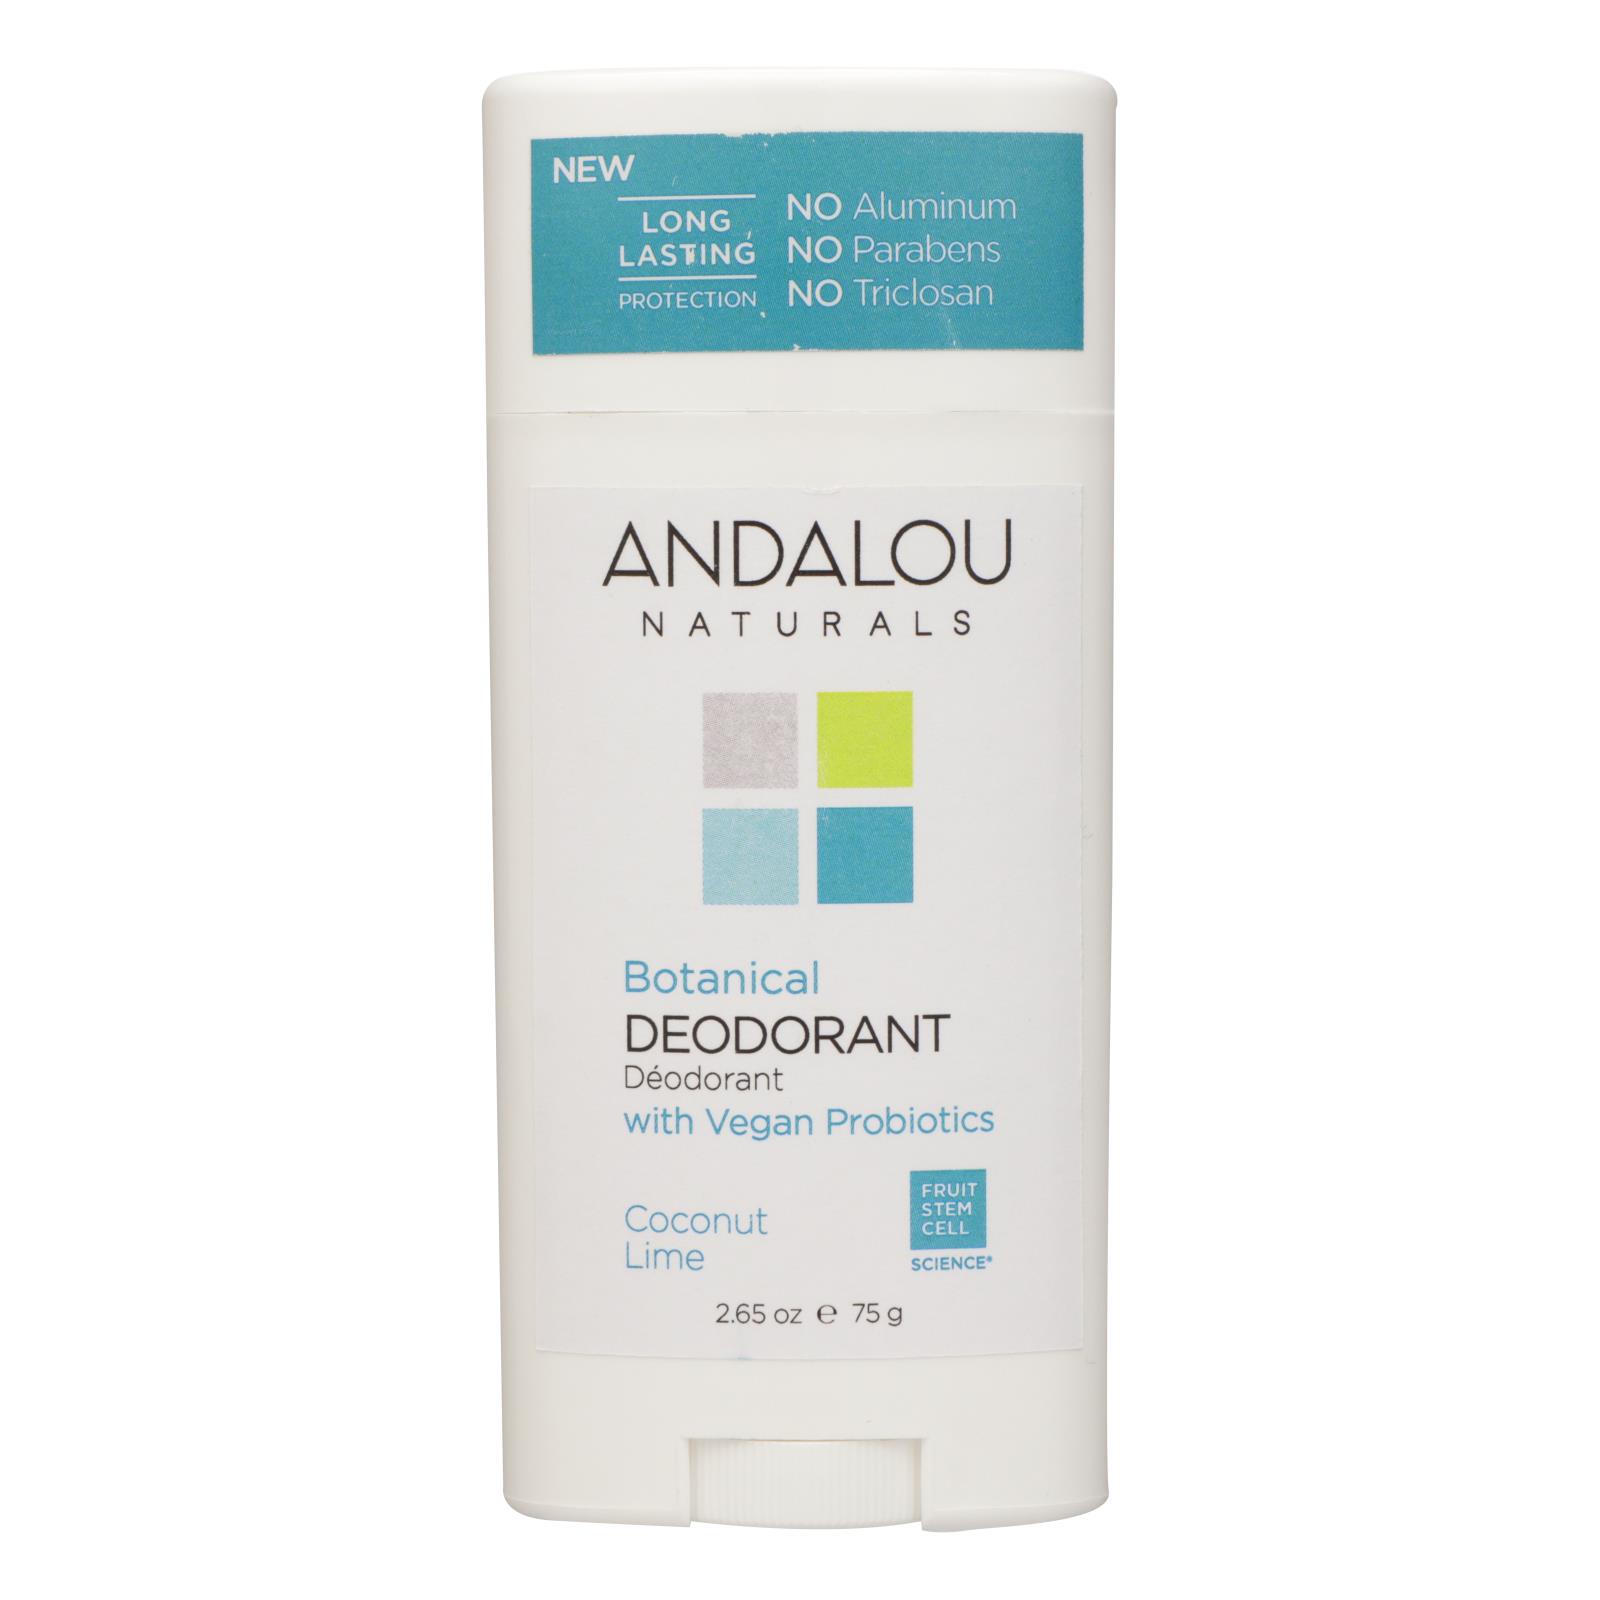 Andalou Naturals - Deodorant Vgn Pro Coconut Lime - 1 Each - 2.65 OZ